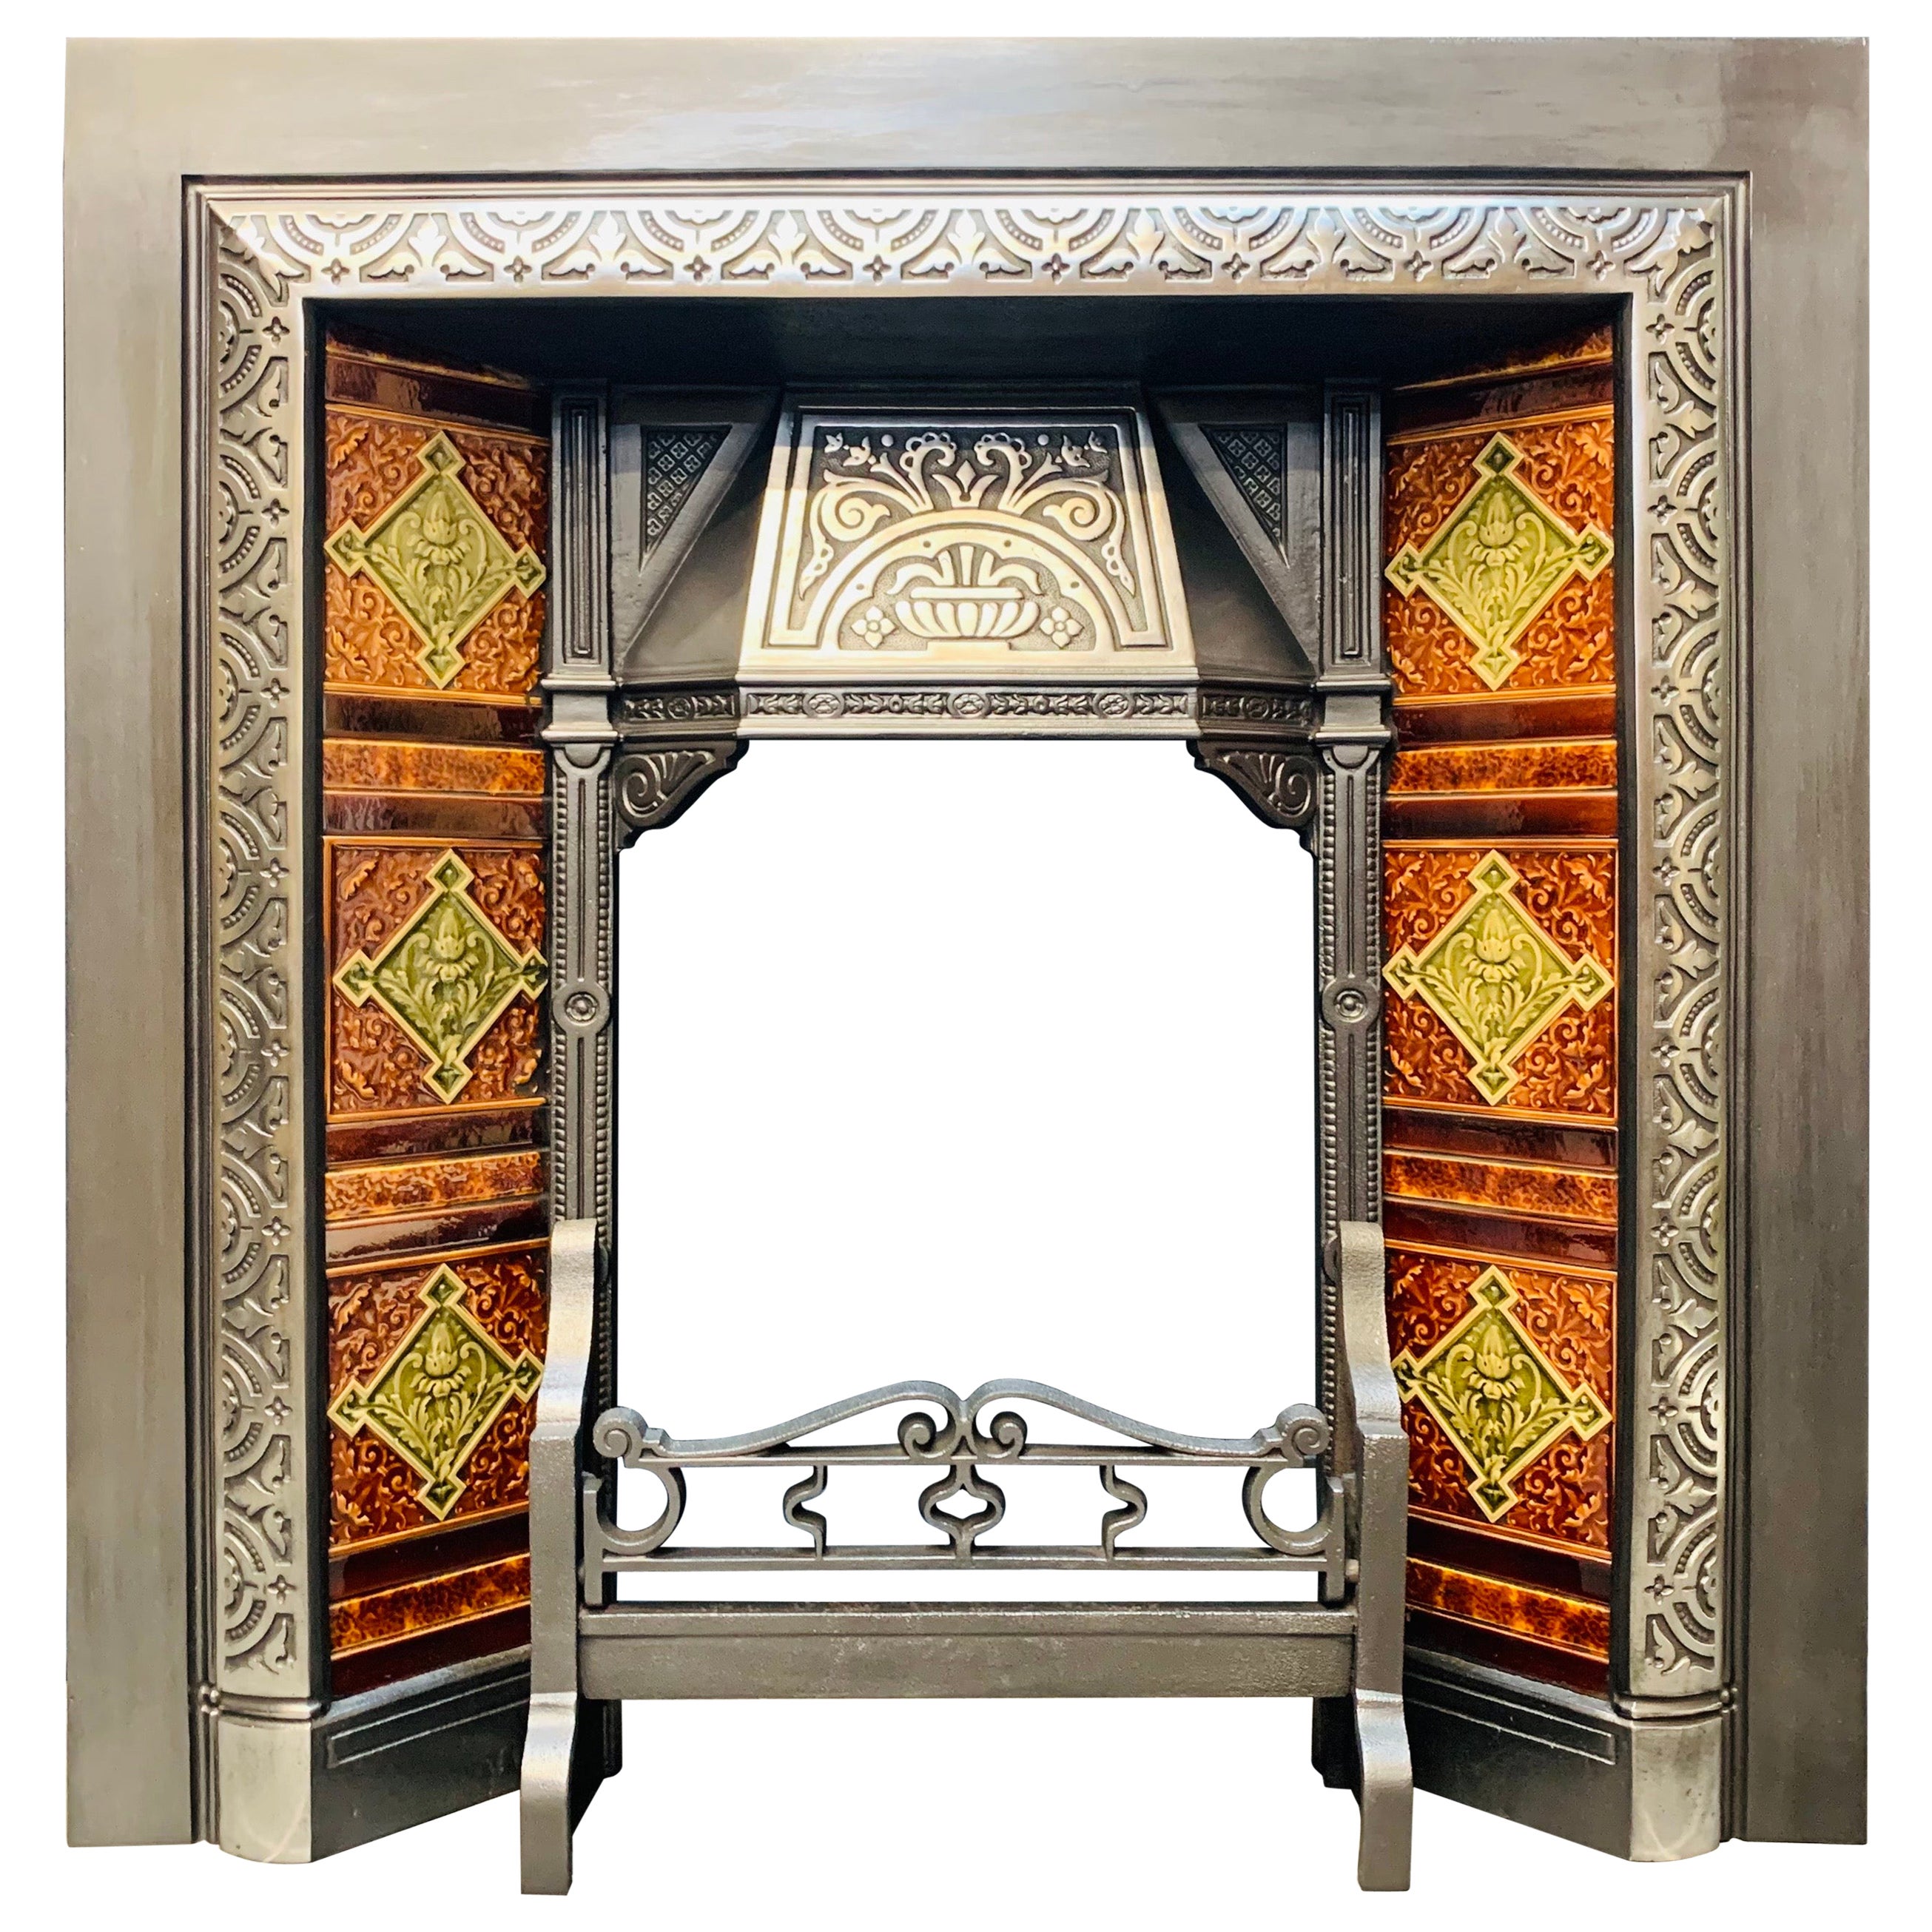 19th Century Scottish Tiled Cast Iron Fireplace Insert